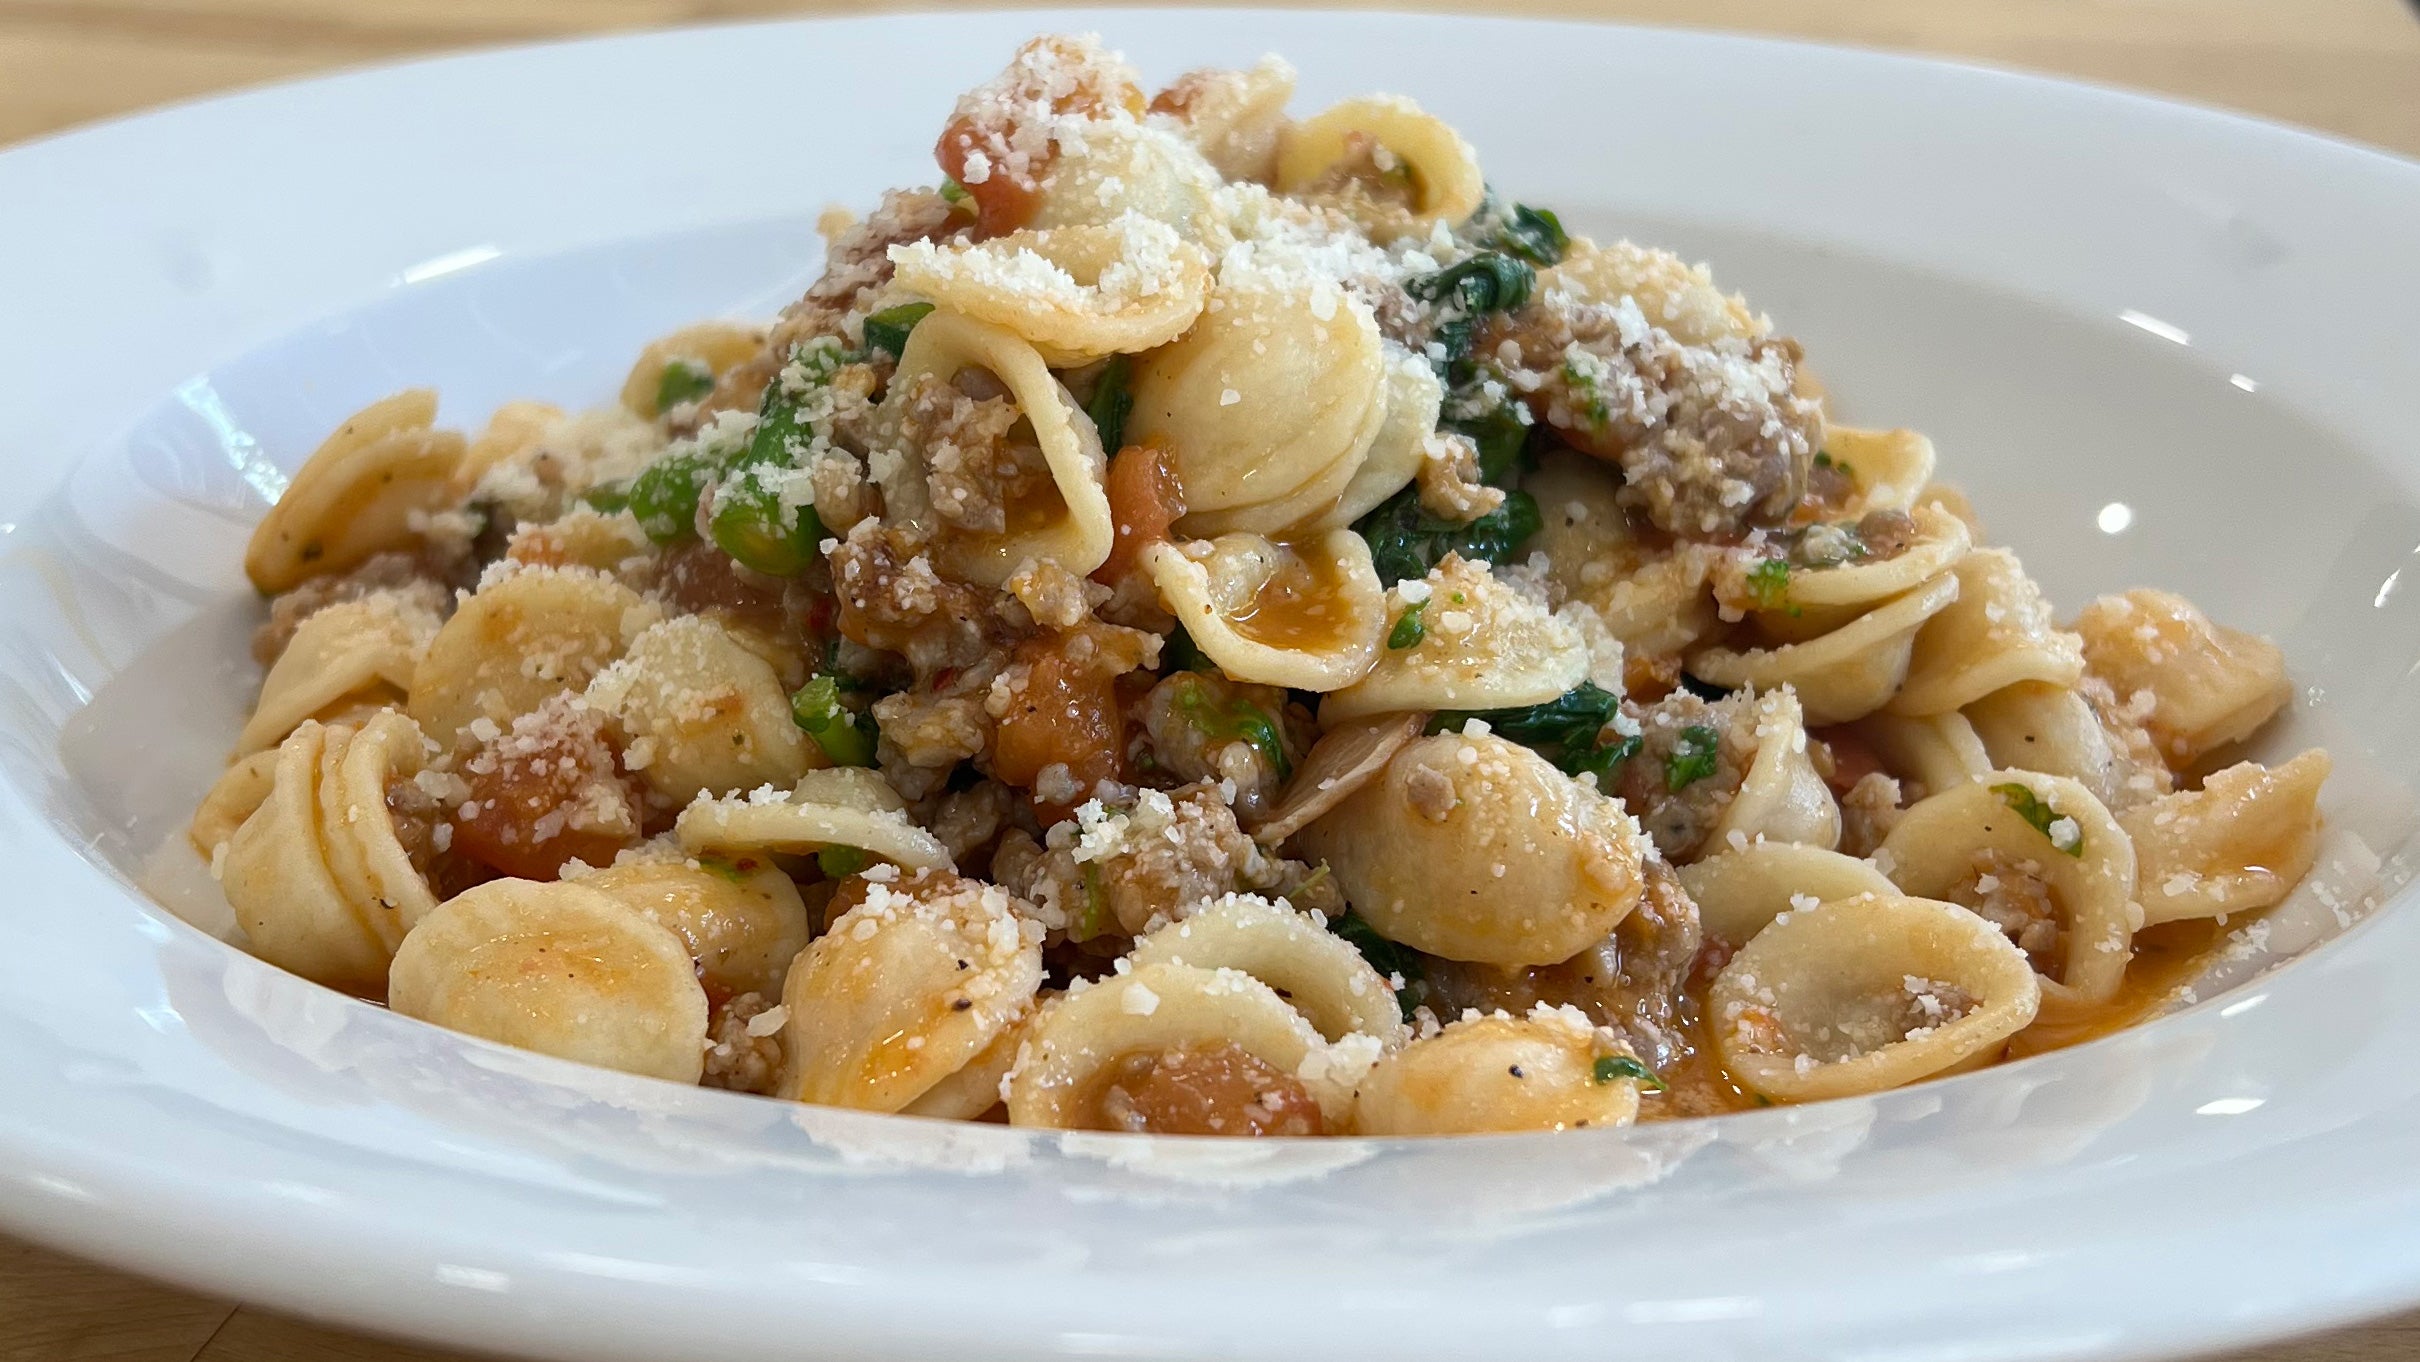 Stella's orecchiette pasta with Italian sausage, garlic, tomatoes, Parmesan, and parsley.